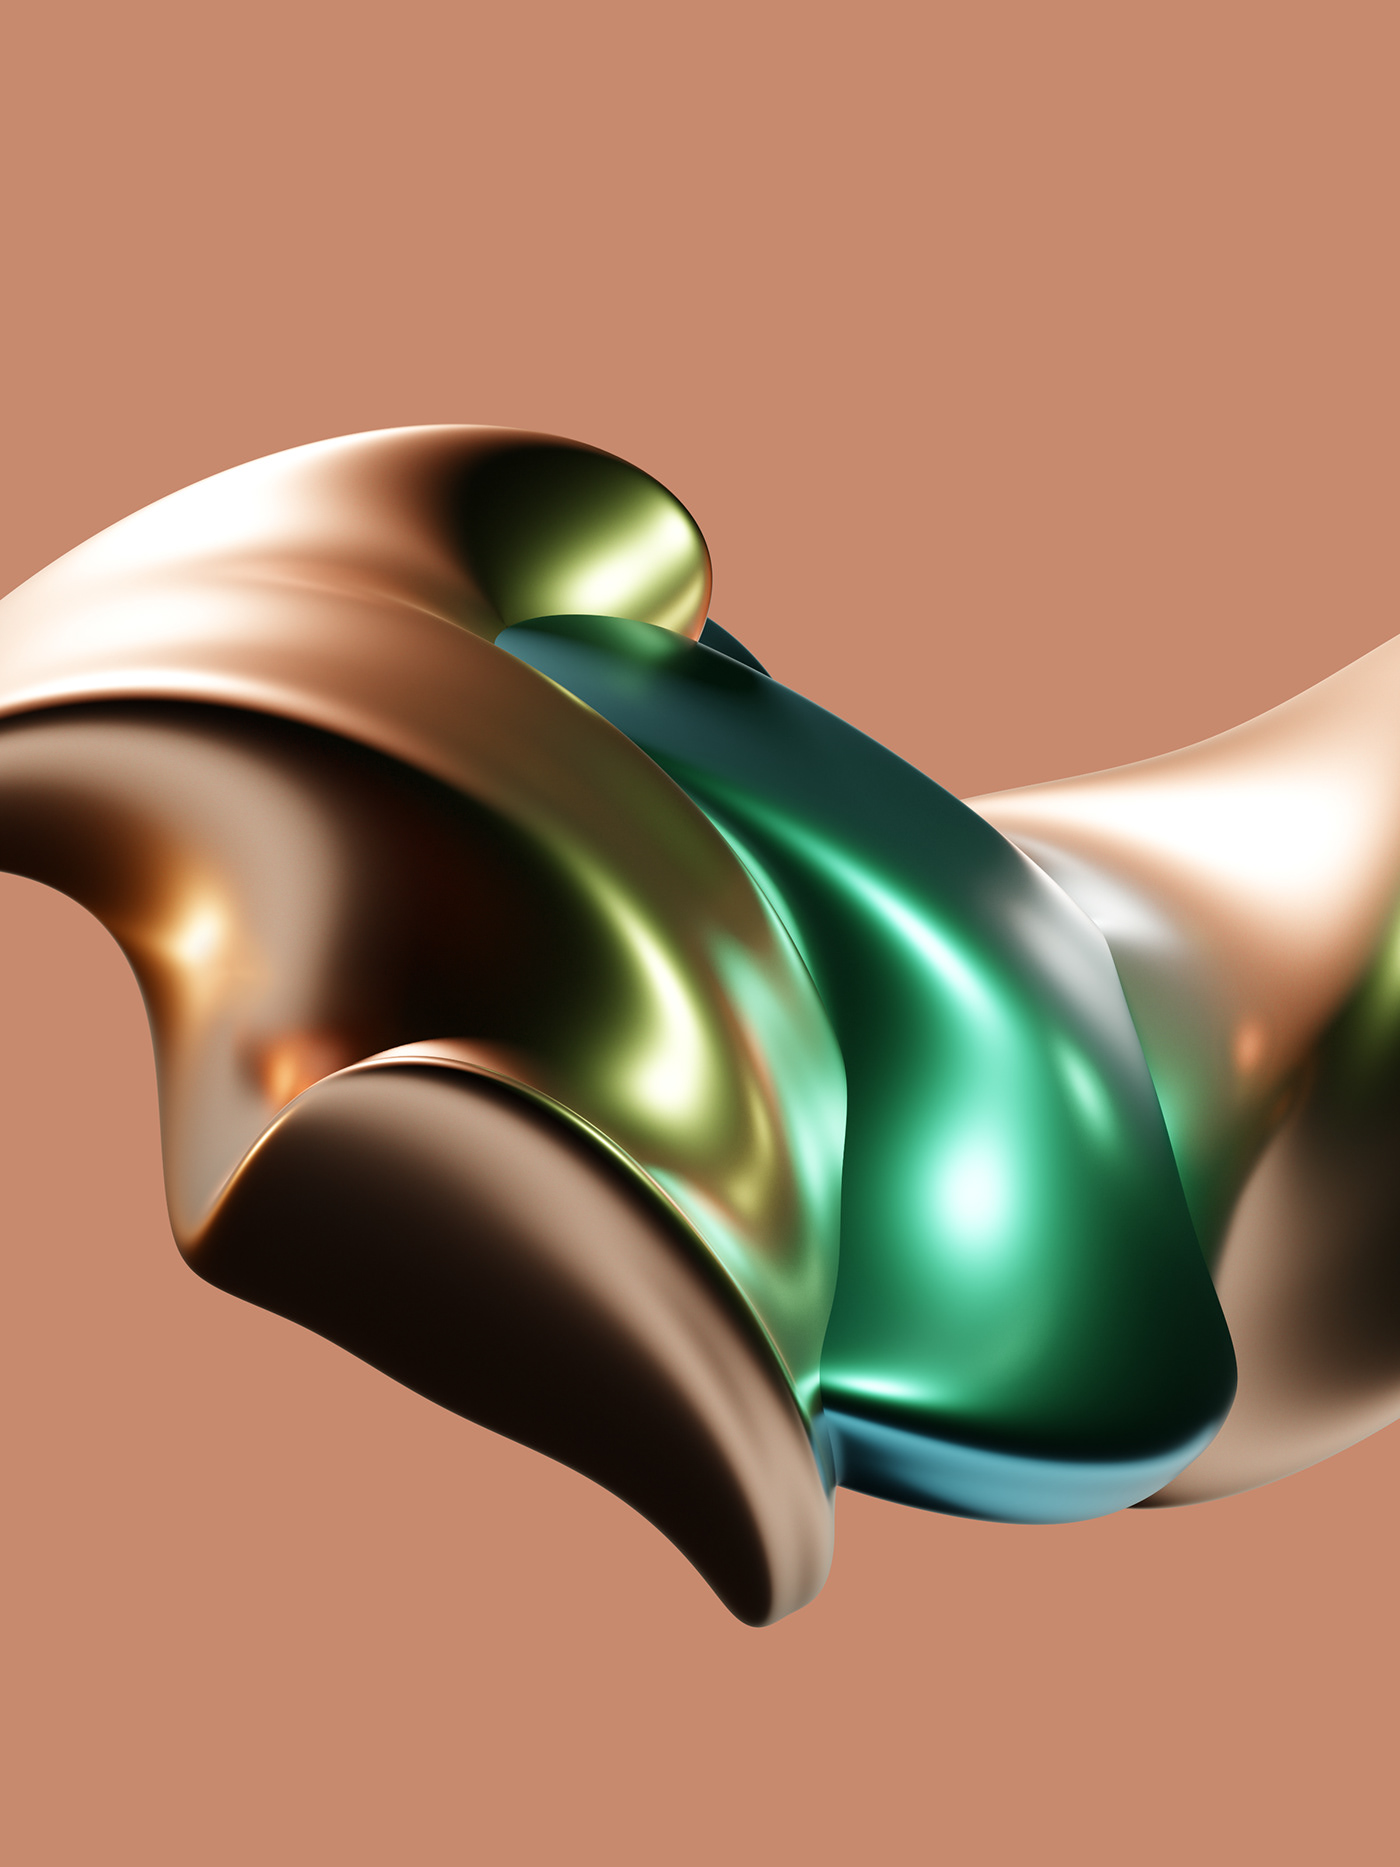 design abstract Digital Art  CGI 3D visualization visual design Render modern luxury